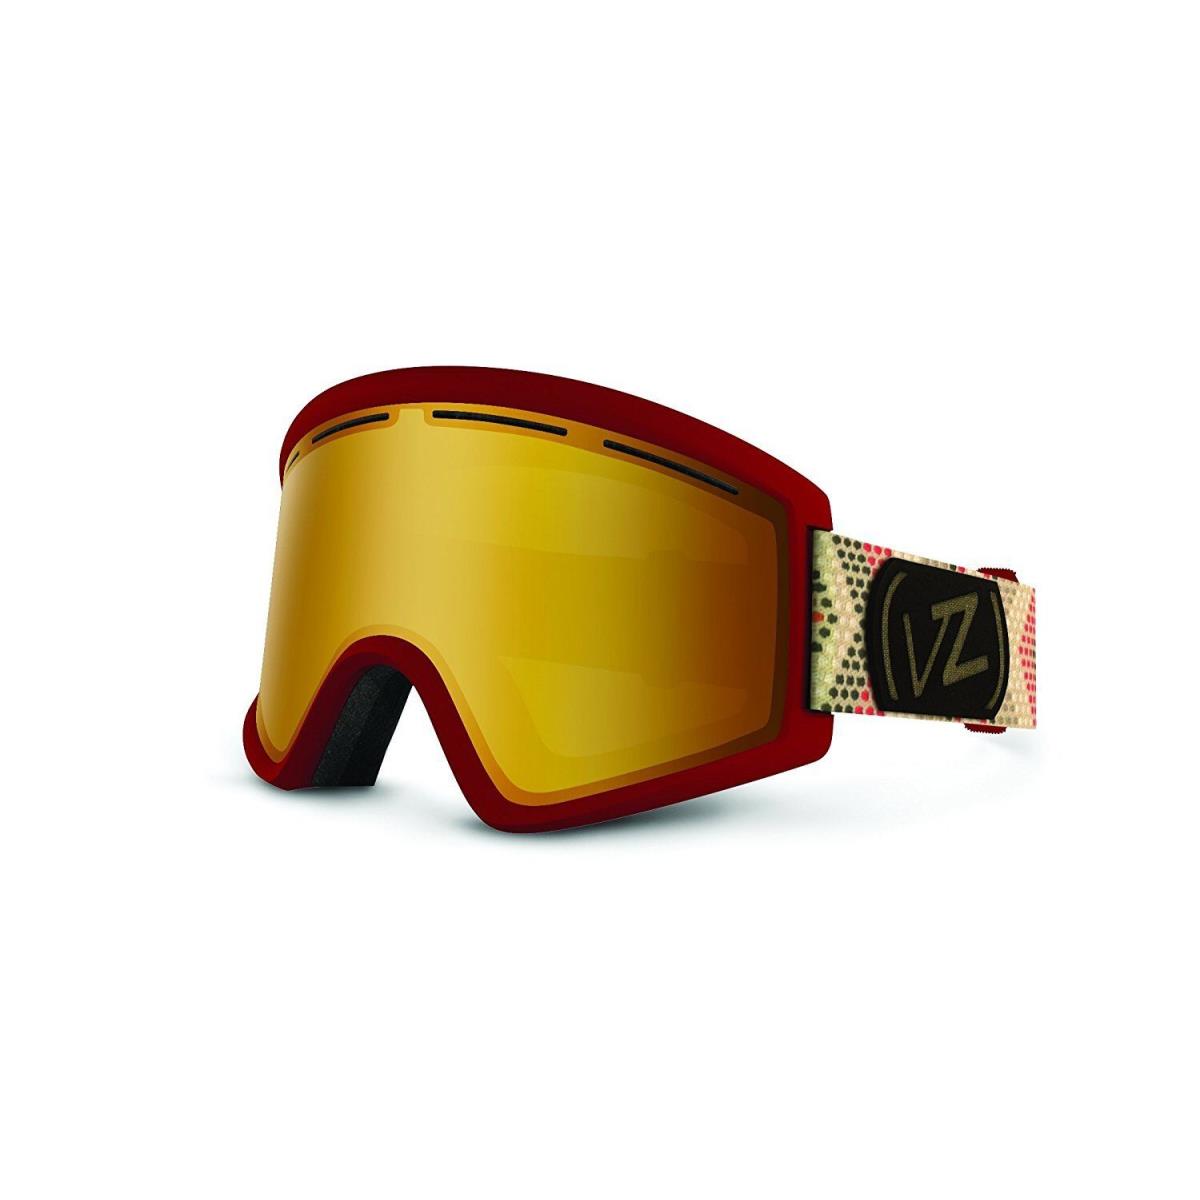 Vonzipper Cleaver Adult Ski / Snowboard Goggles Multiple Colors 